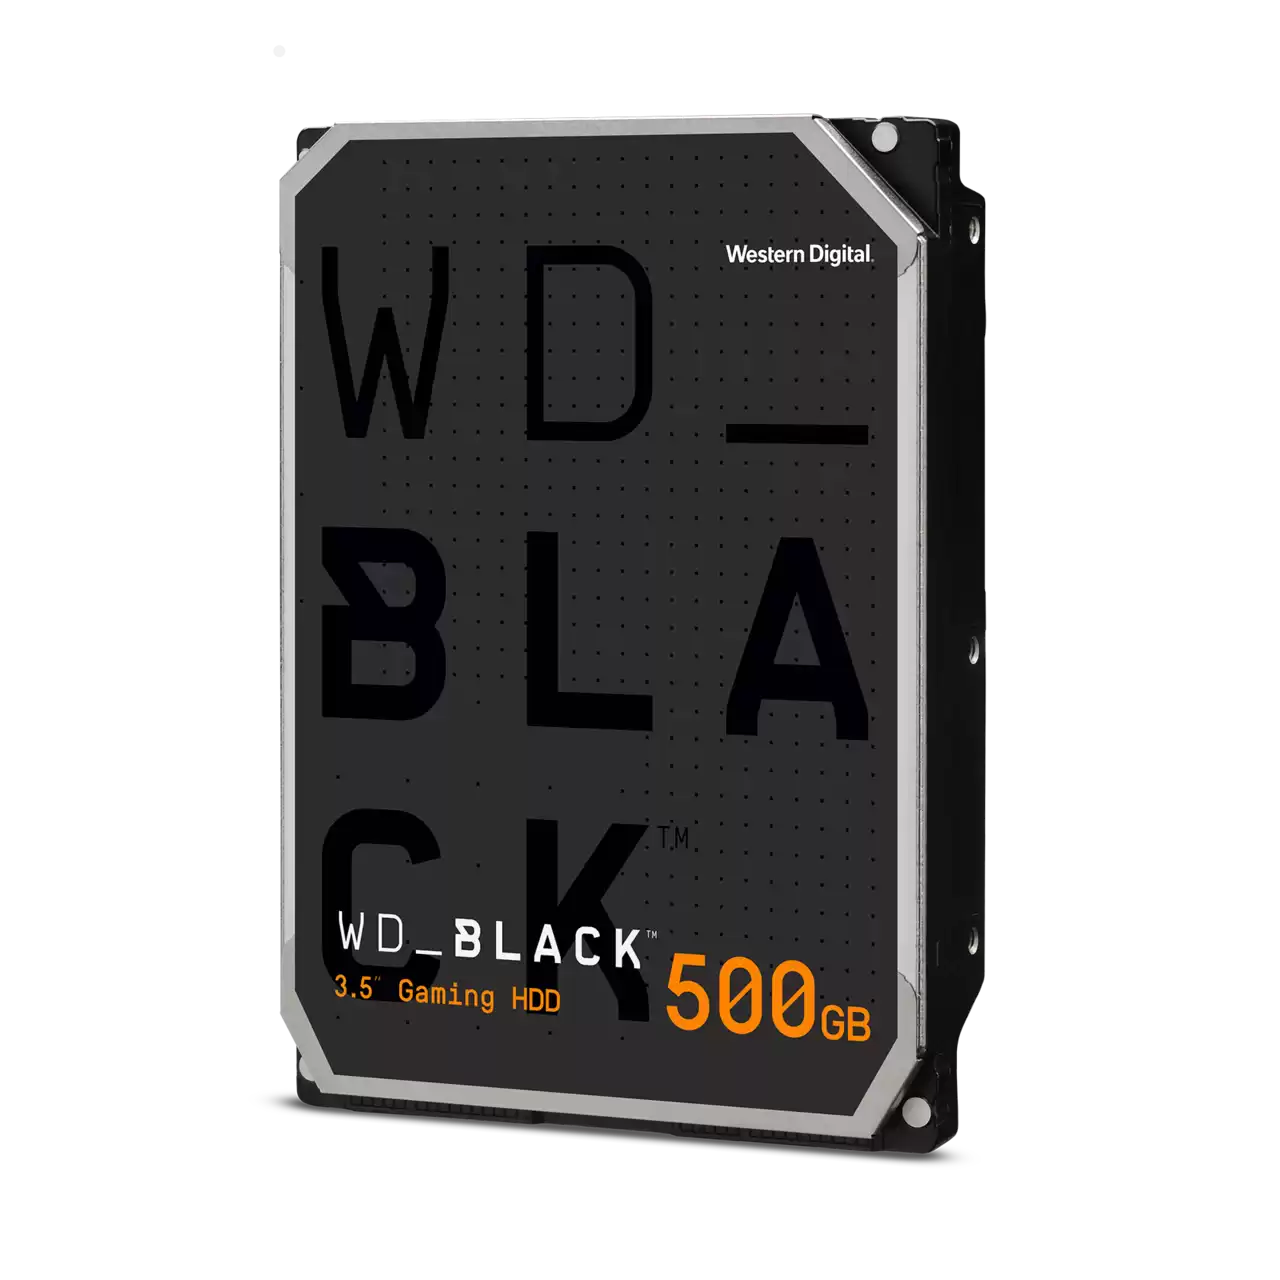 WD_BLACK 3.5-Inch Gaming Hard Drive - 500GB - 3.5 SATA - WD5003AZEX